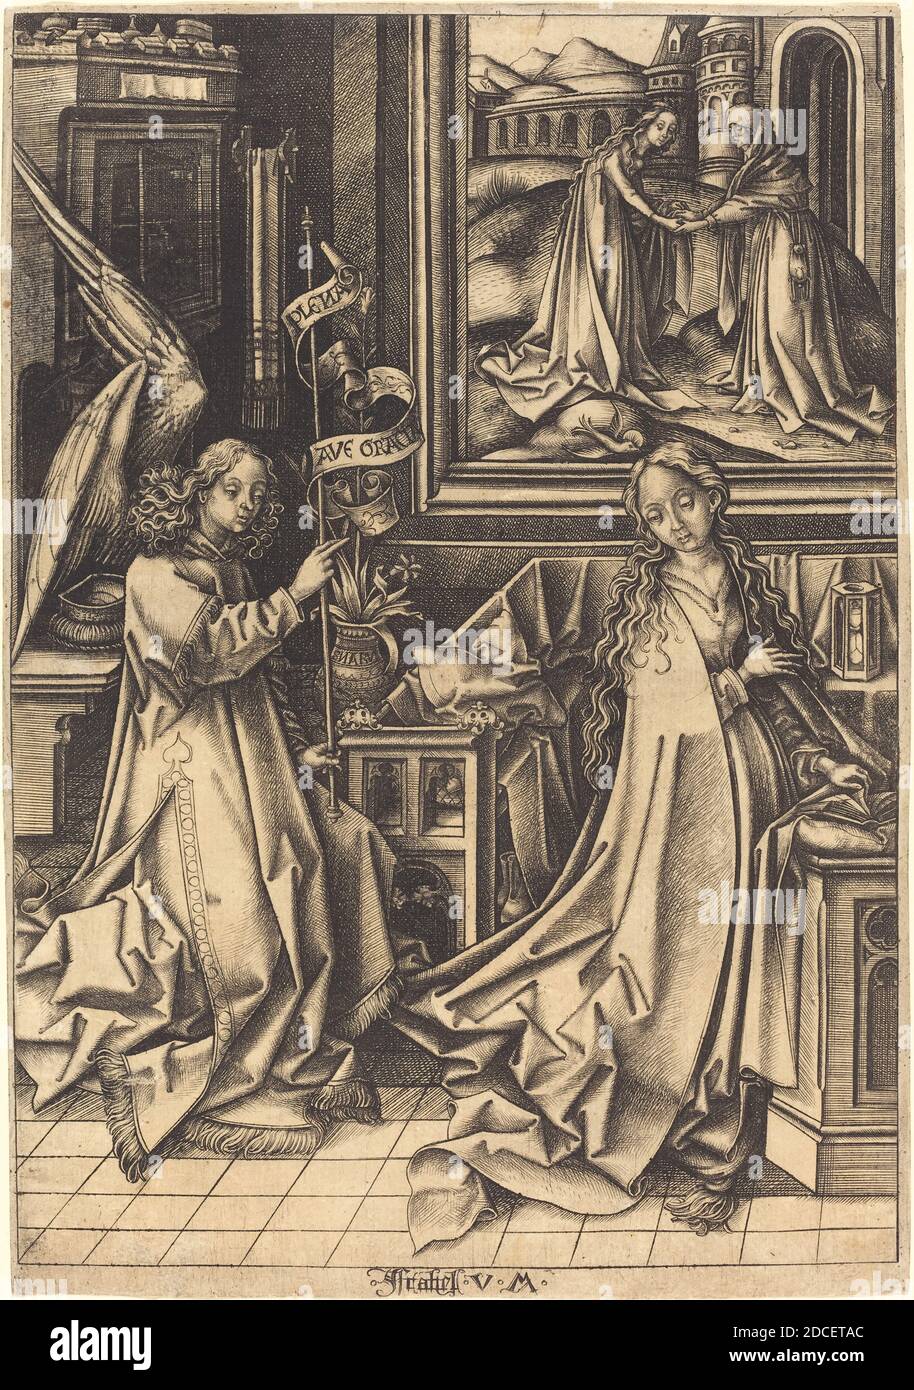 Israhel van Meckenem, (artist), German, c. 1445 - 1503, Hans Holbein the Elder, (artist after), German, c. 1465 - 1524, The Annunciation, The Life of the Virgin, (series), c. 1490/1500, engraving Stock Photo